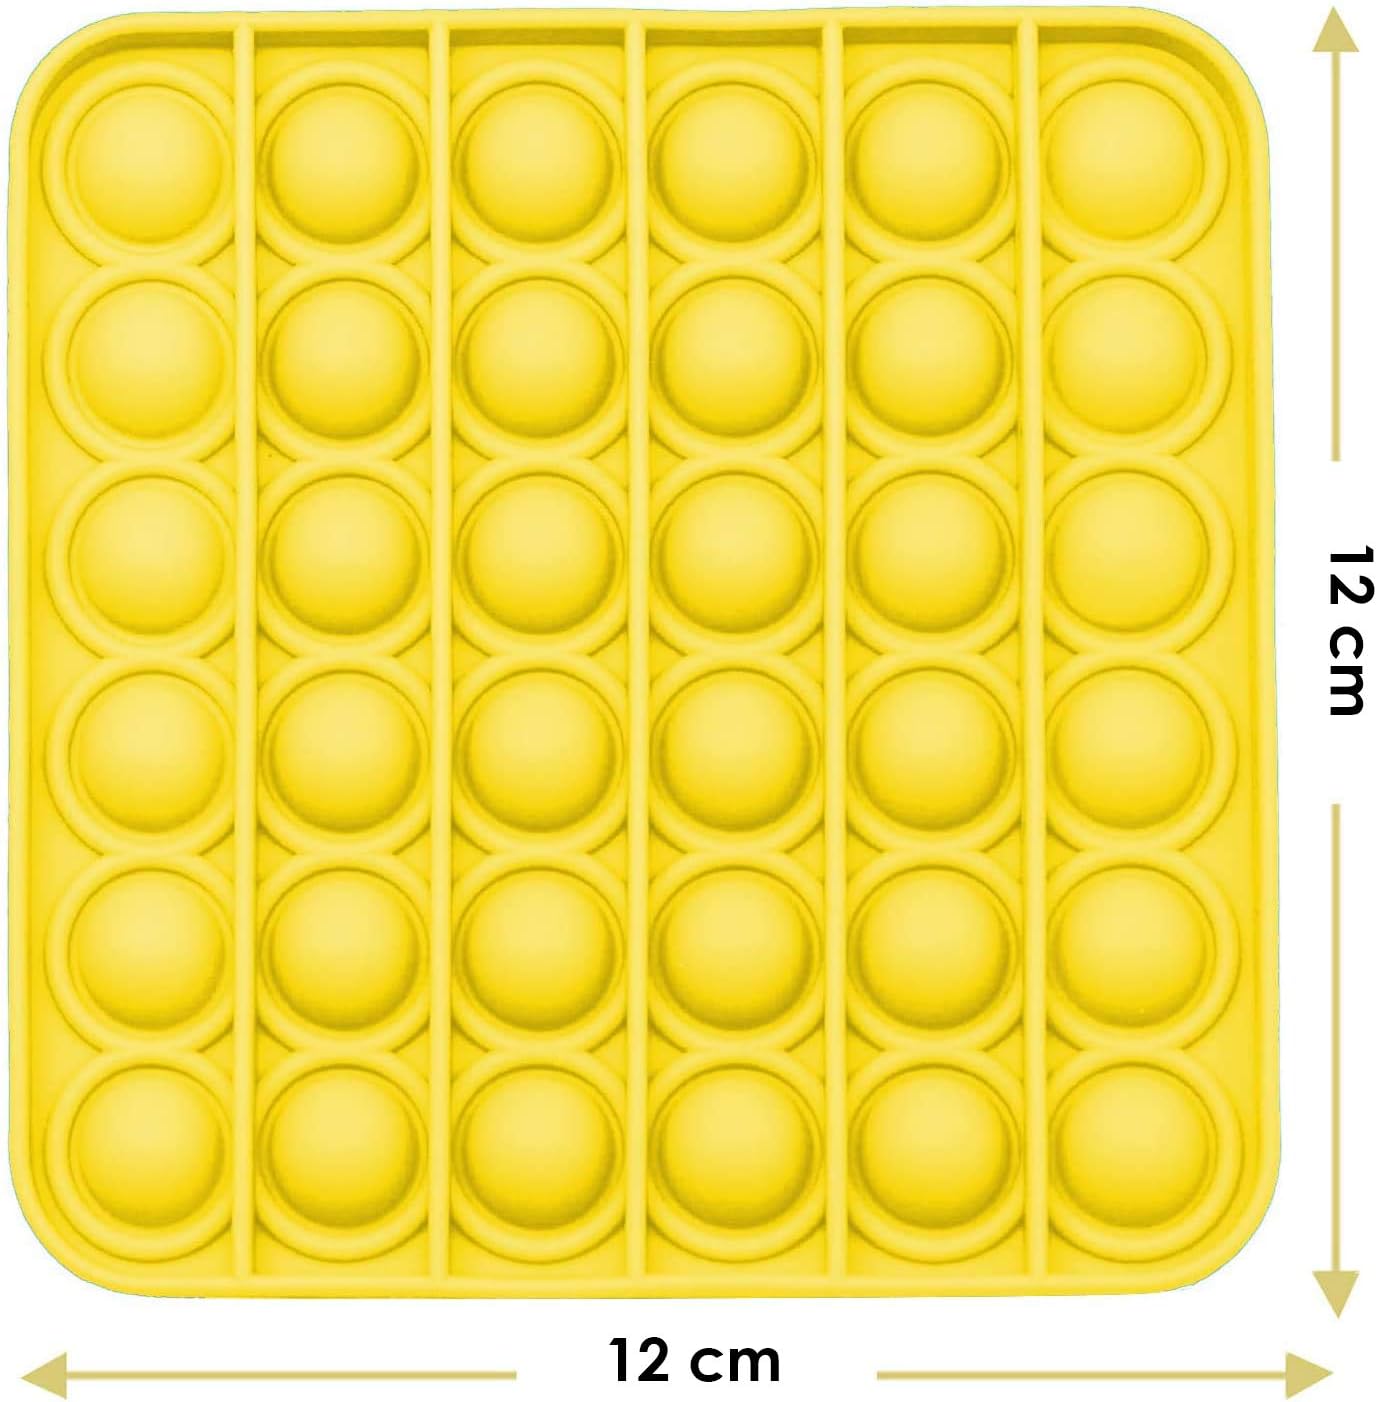 DSFKHG Push Pop Bubble Sensory Fidget Toy For Children Adult (Square, Yellow)